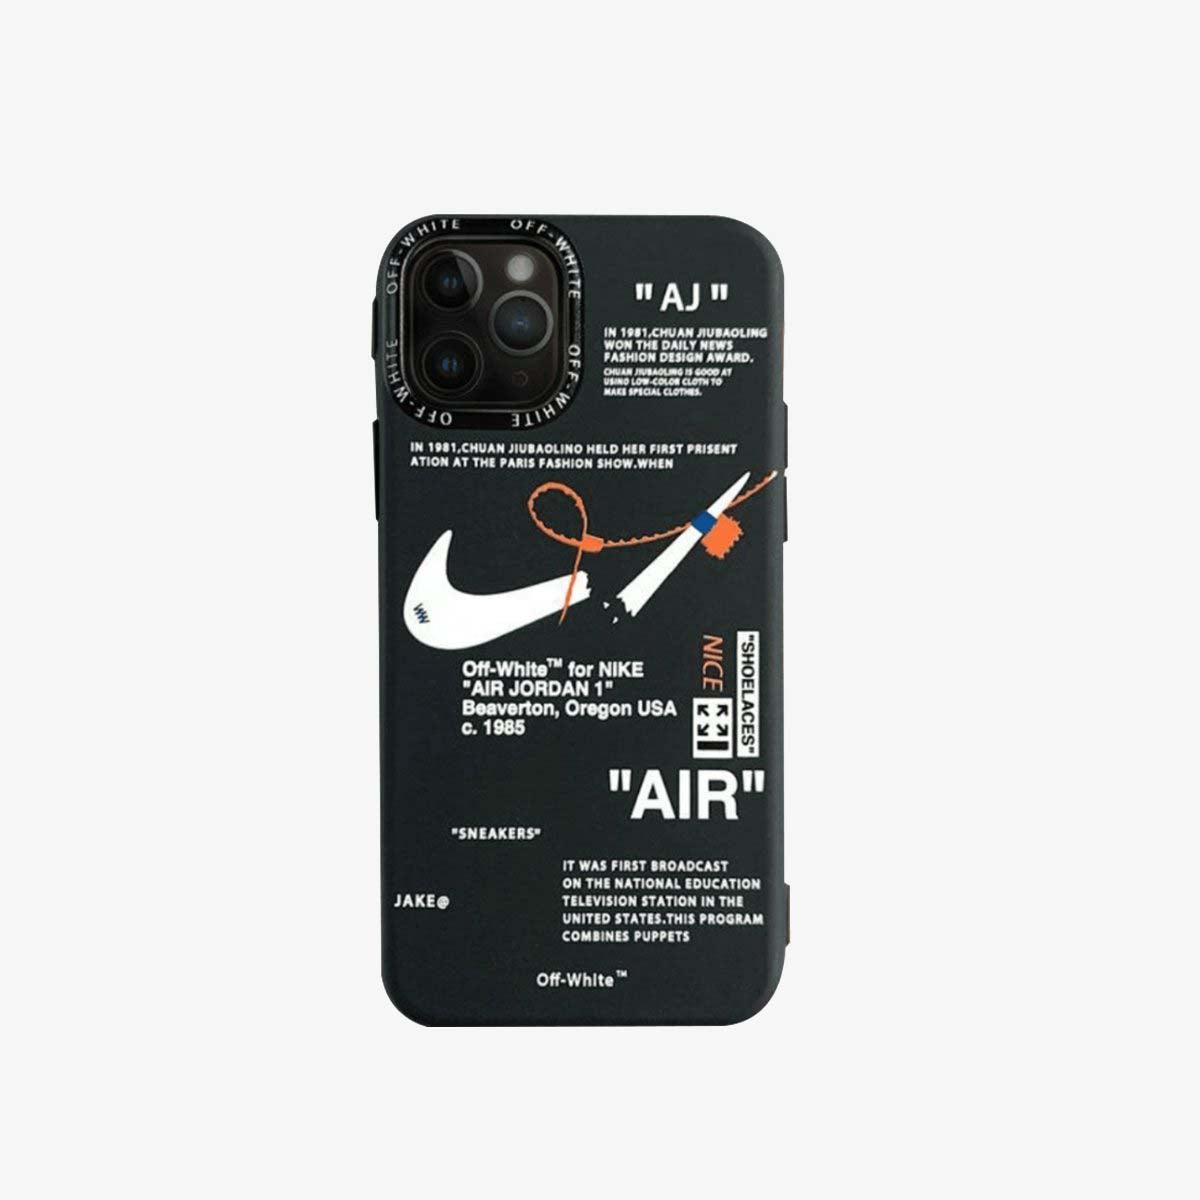 Nike iphone se3/14/13 pro max TPU case coque hulle